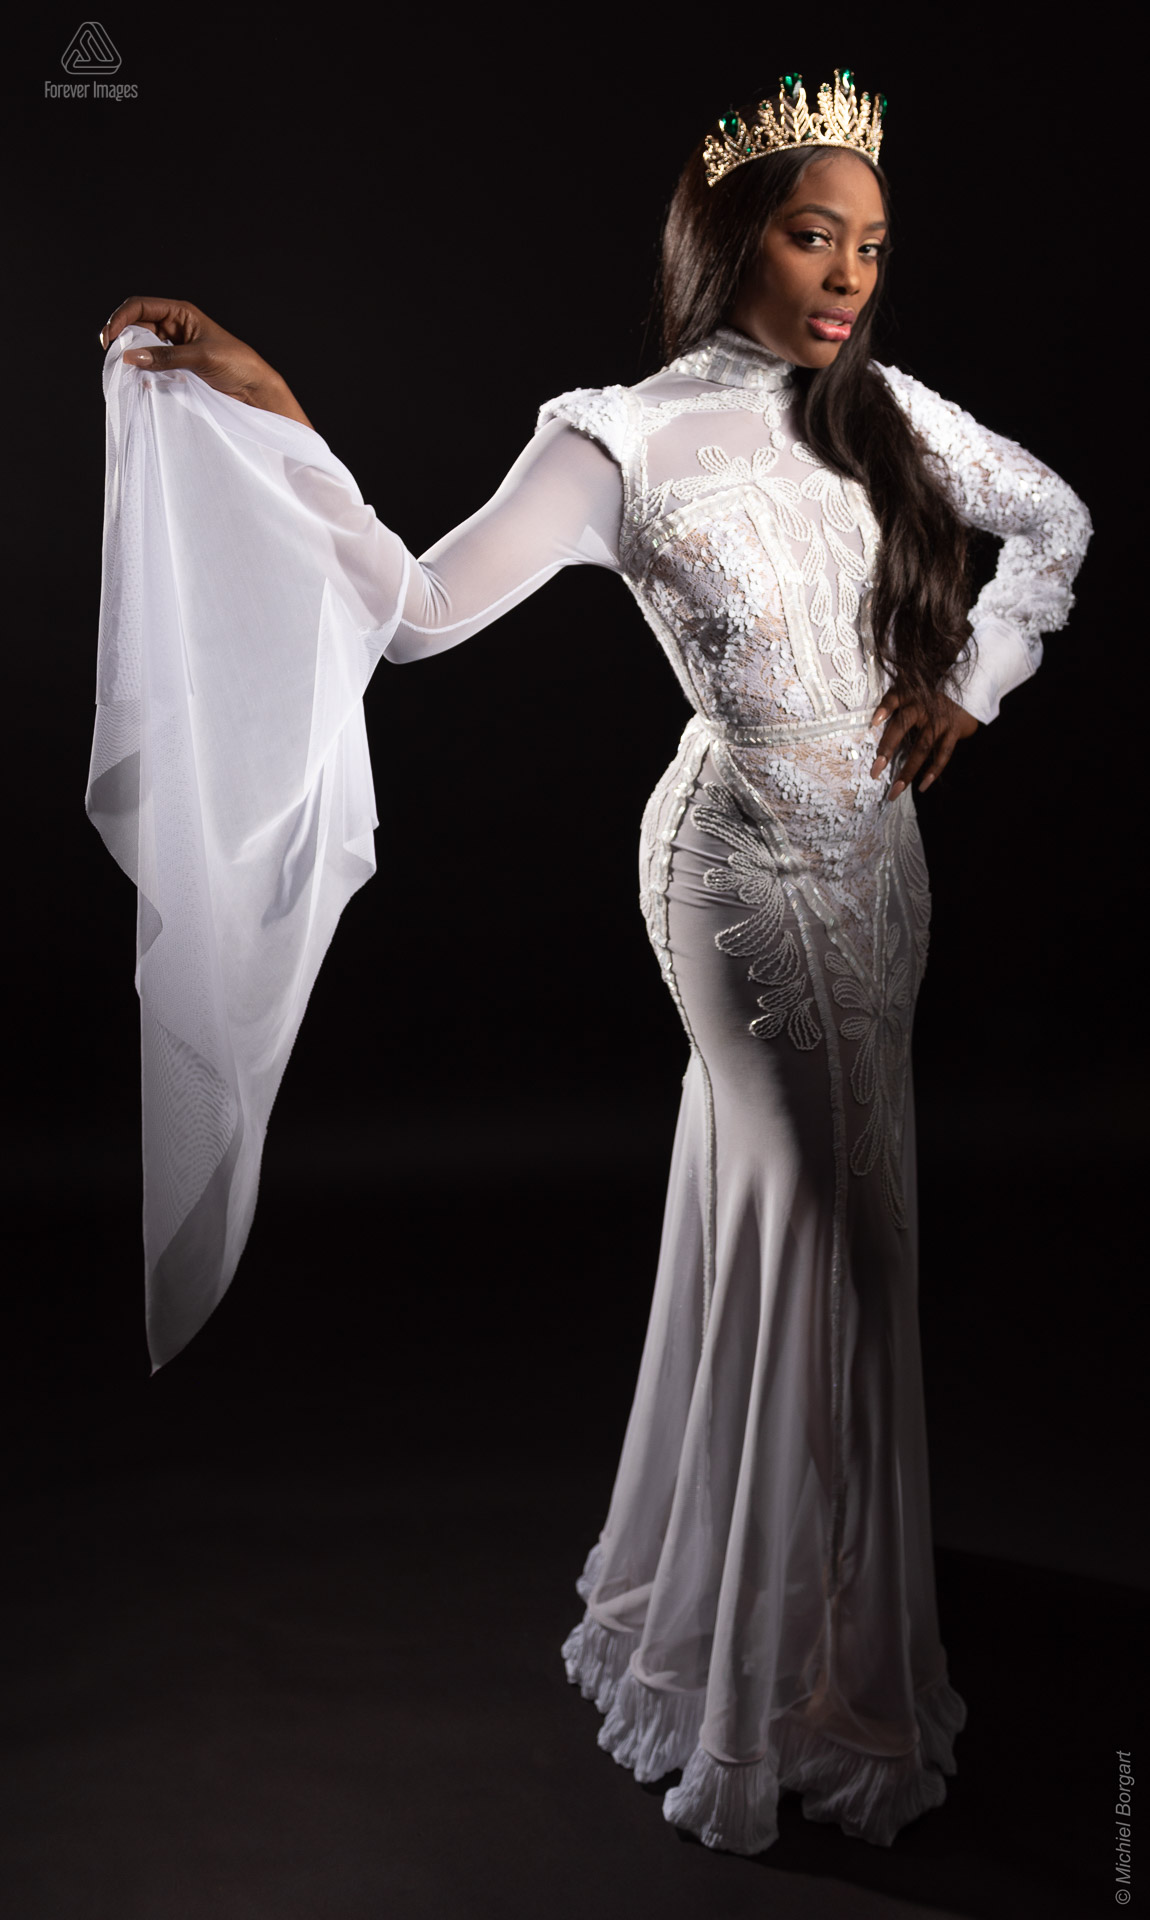 Fashion photo white dress total crown hand on side | Mariana Pietersz Miss Avantgarde Ronald Rizzo Piu Colore | Fashion Photographer Michiel Borgart - Forever Images.